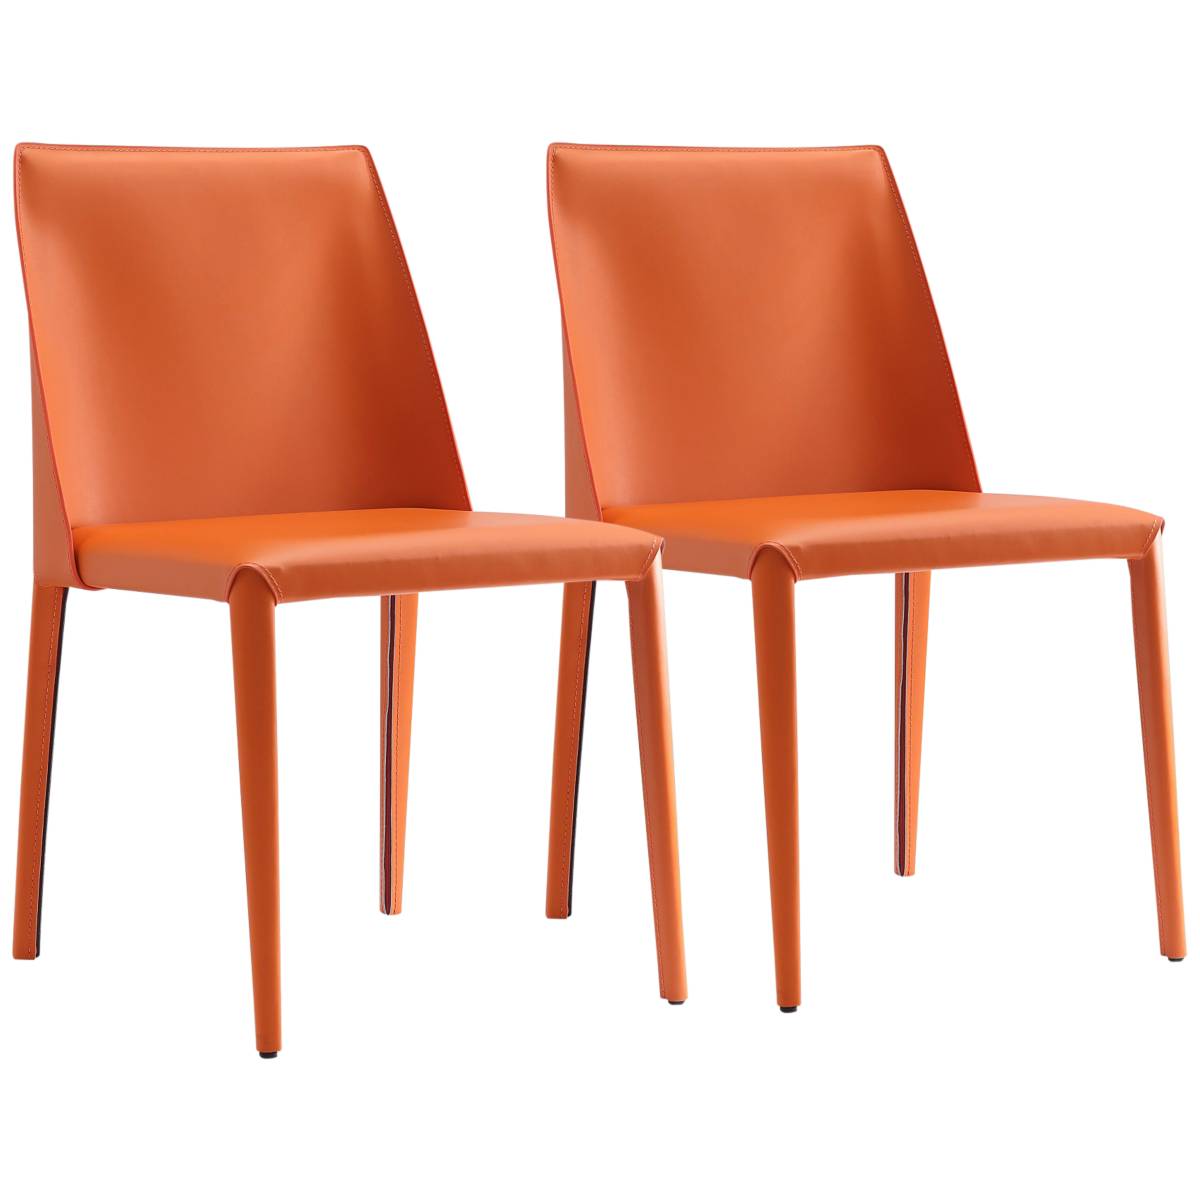 Orange Seating | Lamps Plus